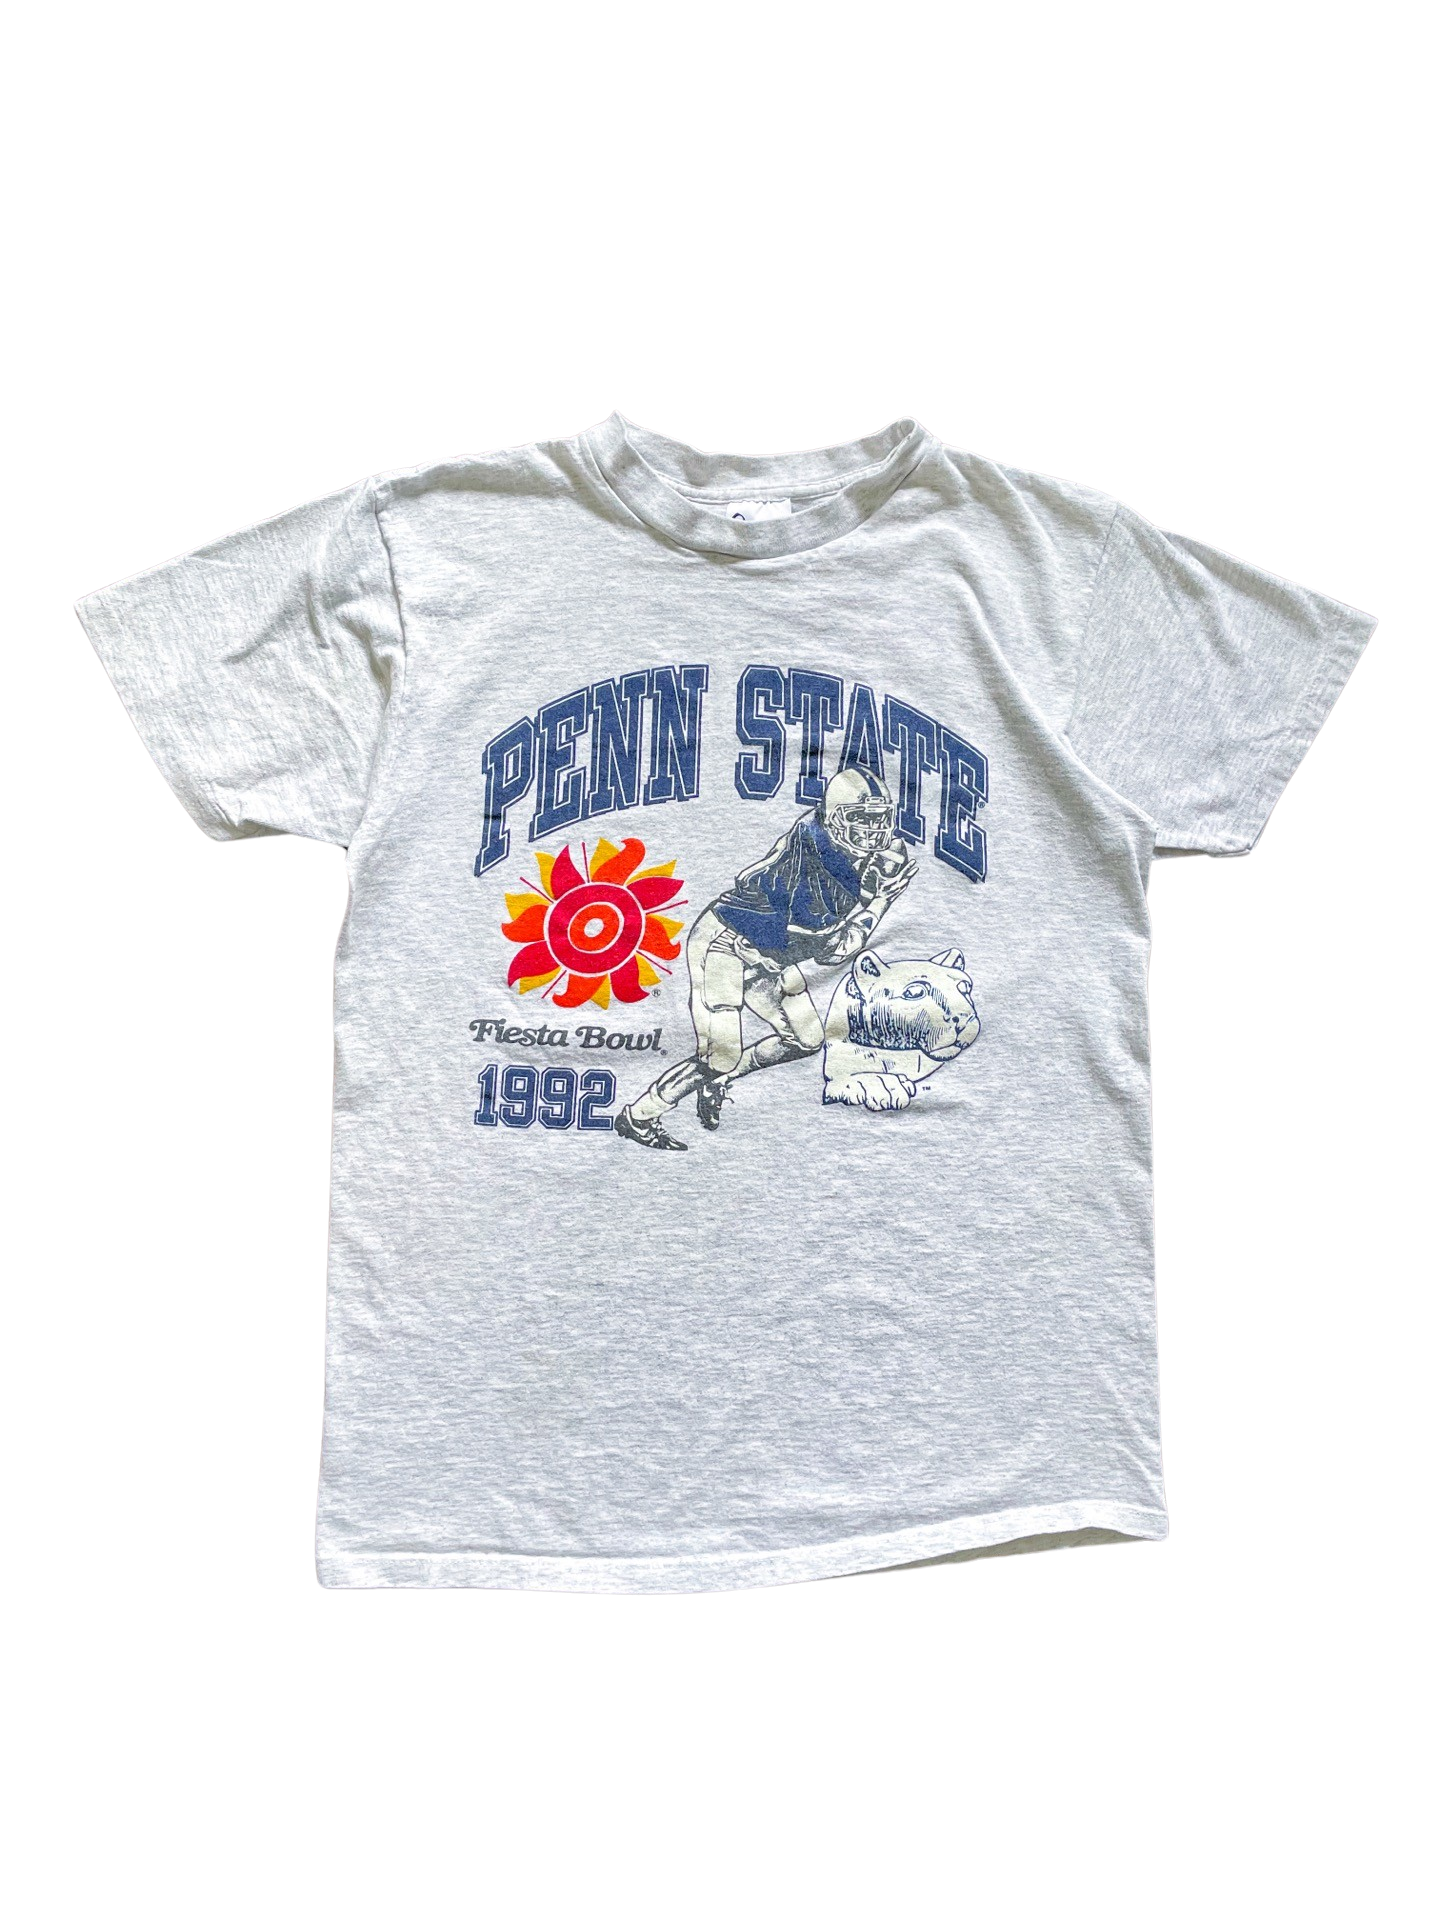 Vintage Penn State t-shirt